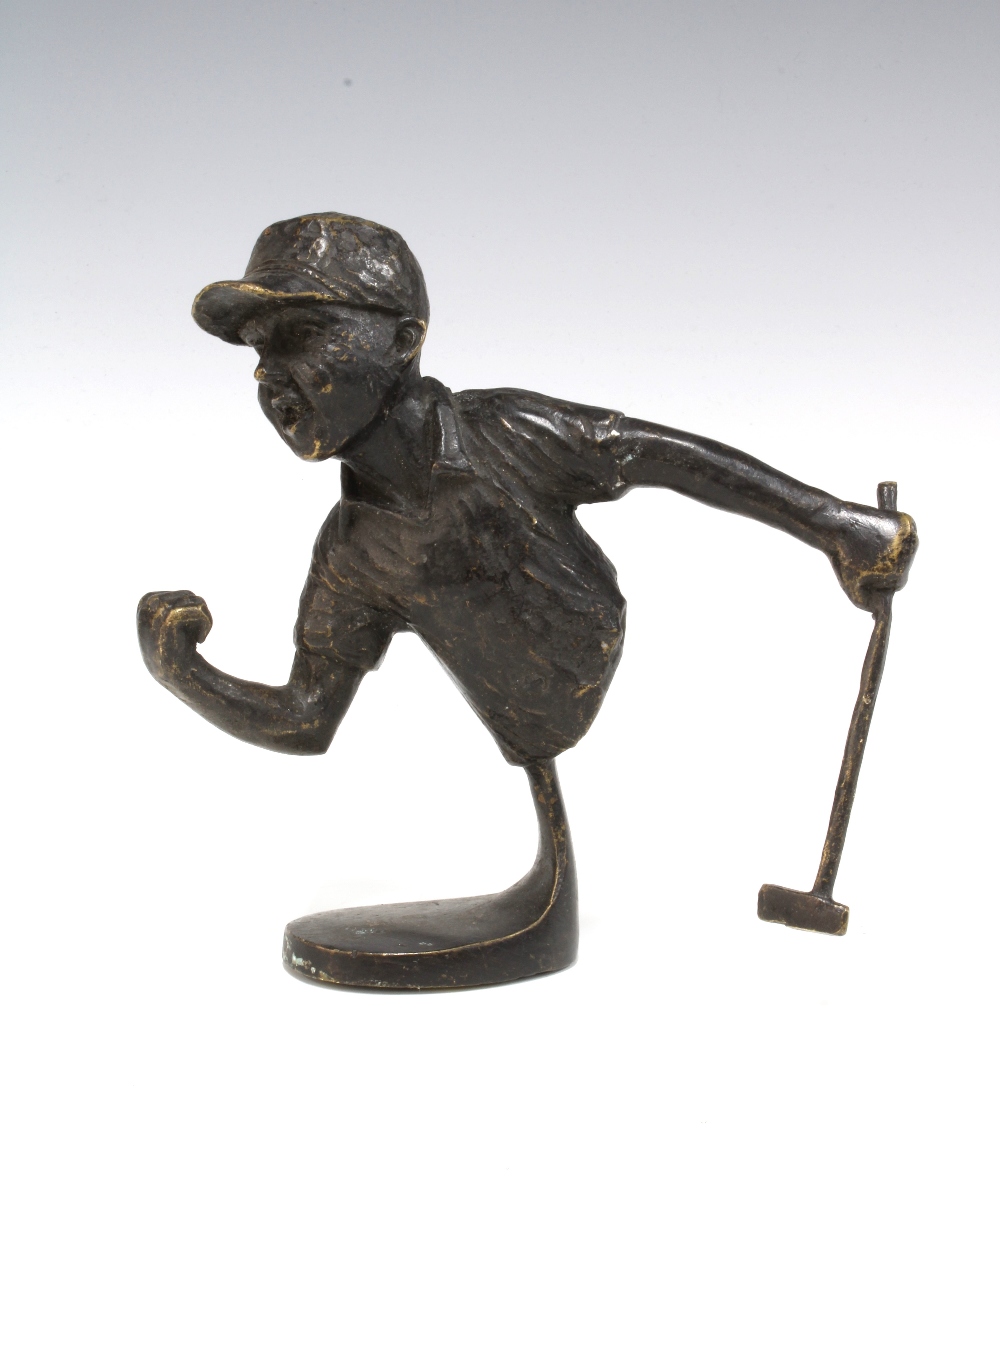 Bronze golf putter figure, on golf club shaped base, 14cm high